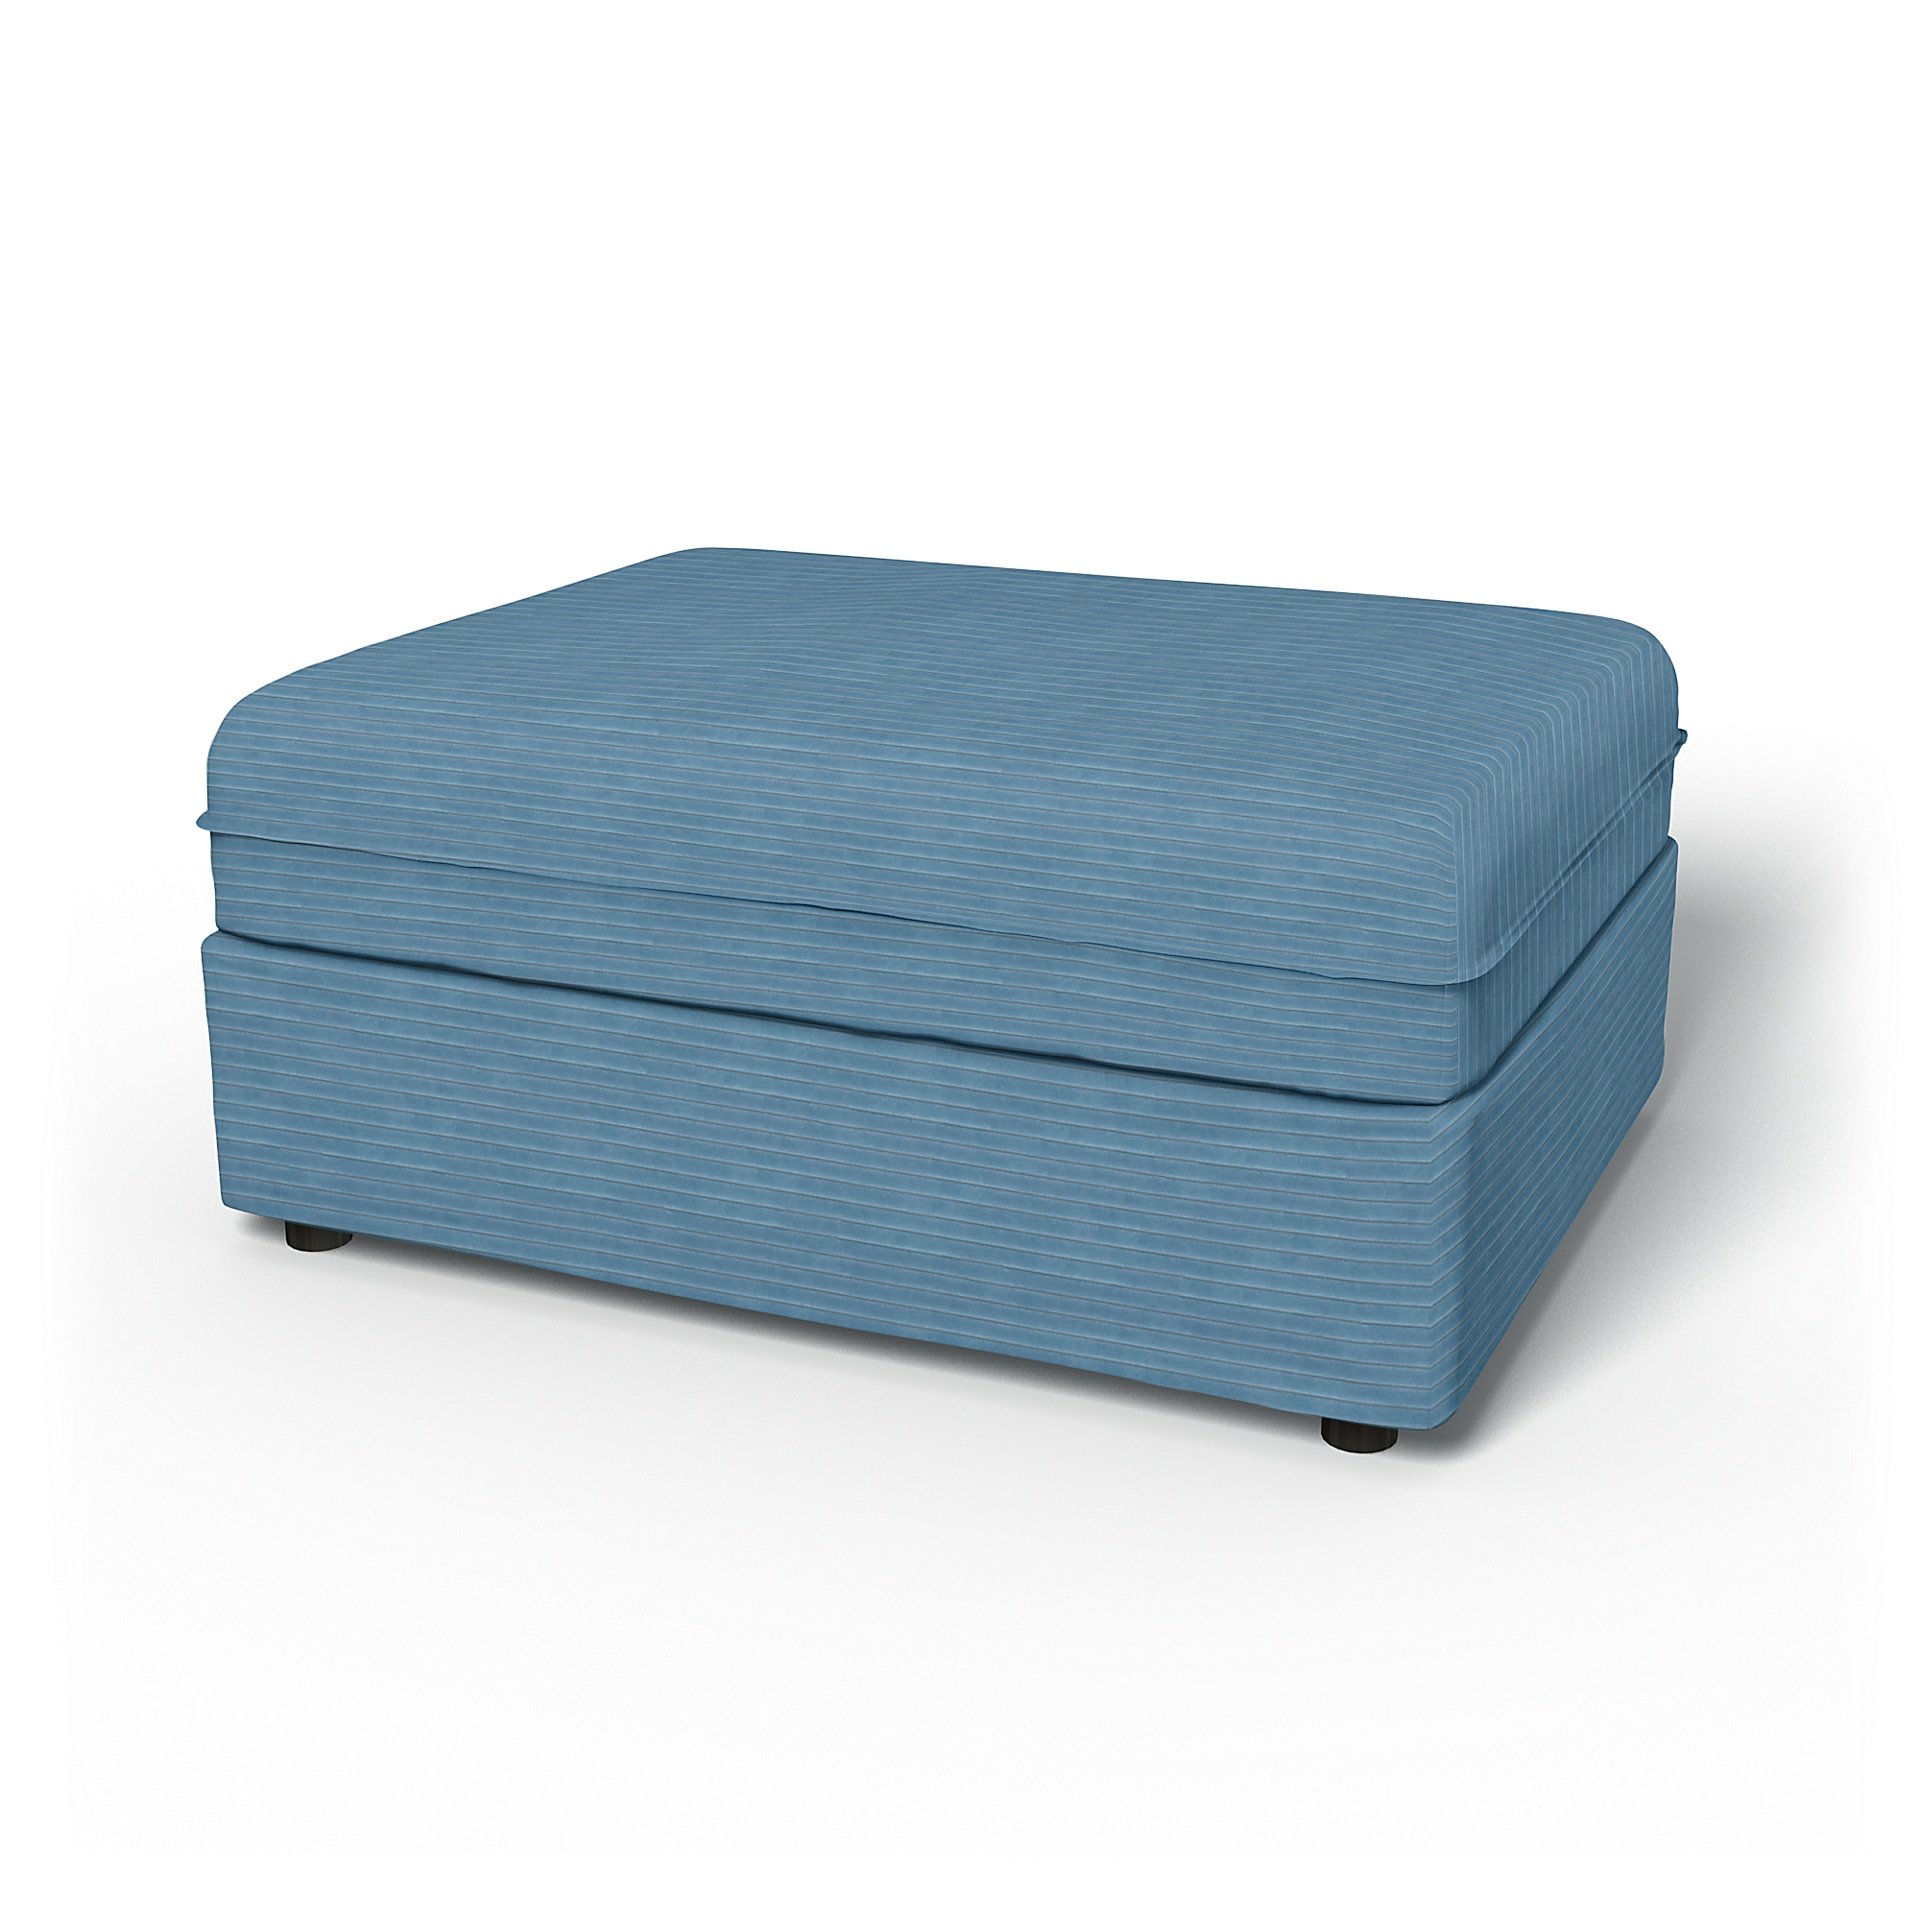 IKEA - Vallentuna Seat Module Cover 100x80cm 39x32in, Sky Blue, Corduroy - Bemz